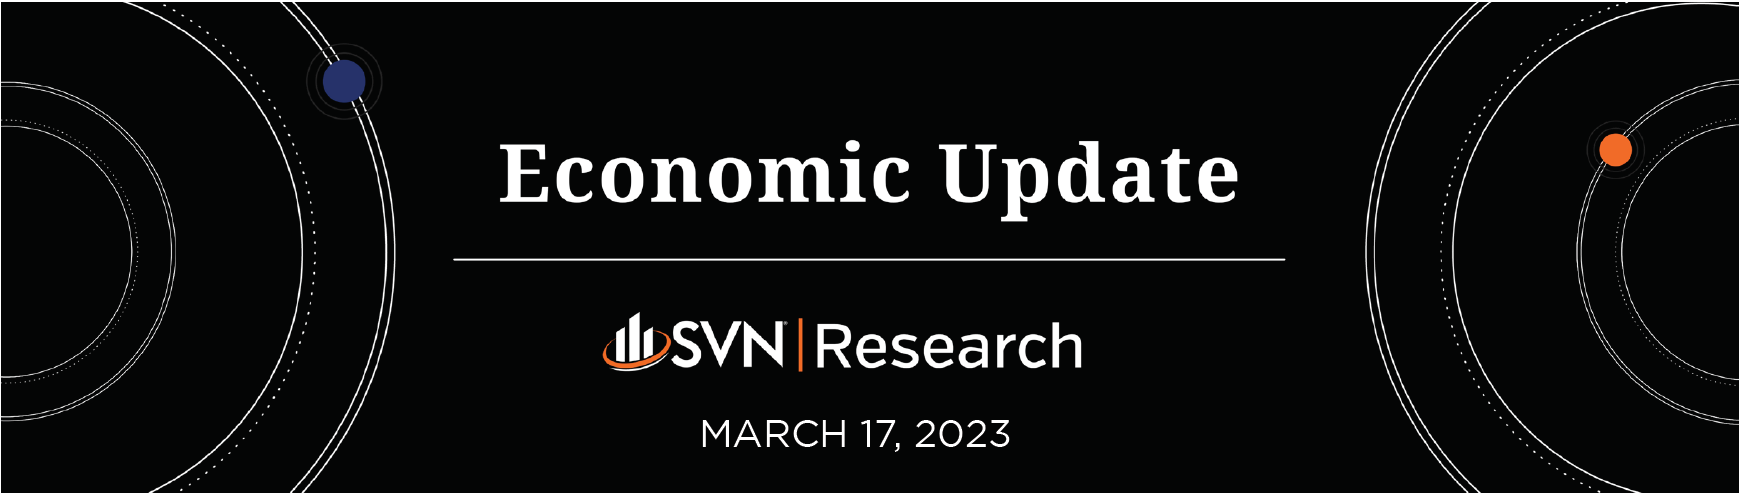 SVN | Research Economic Update 03.17.2023